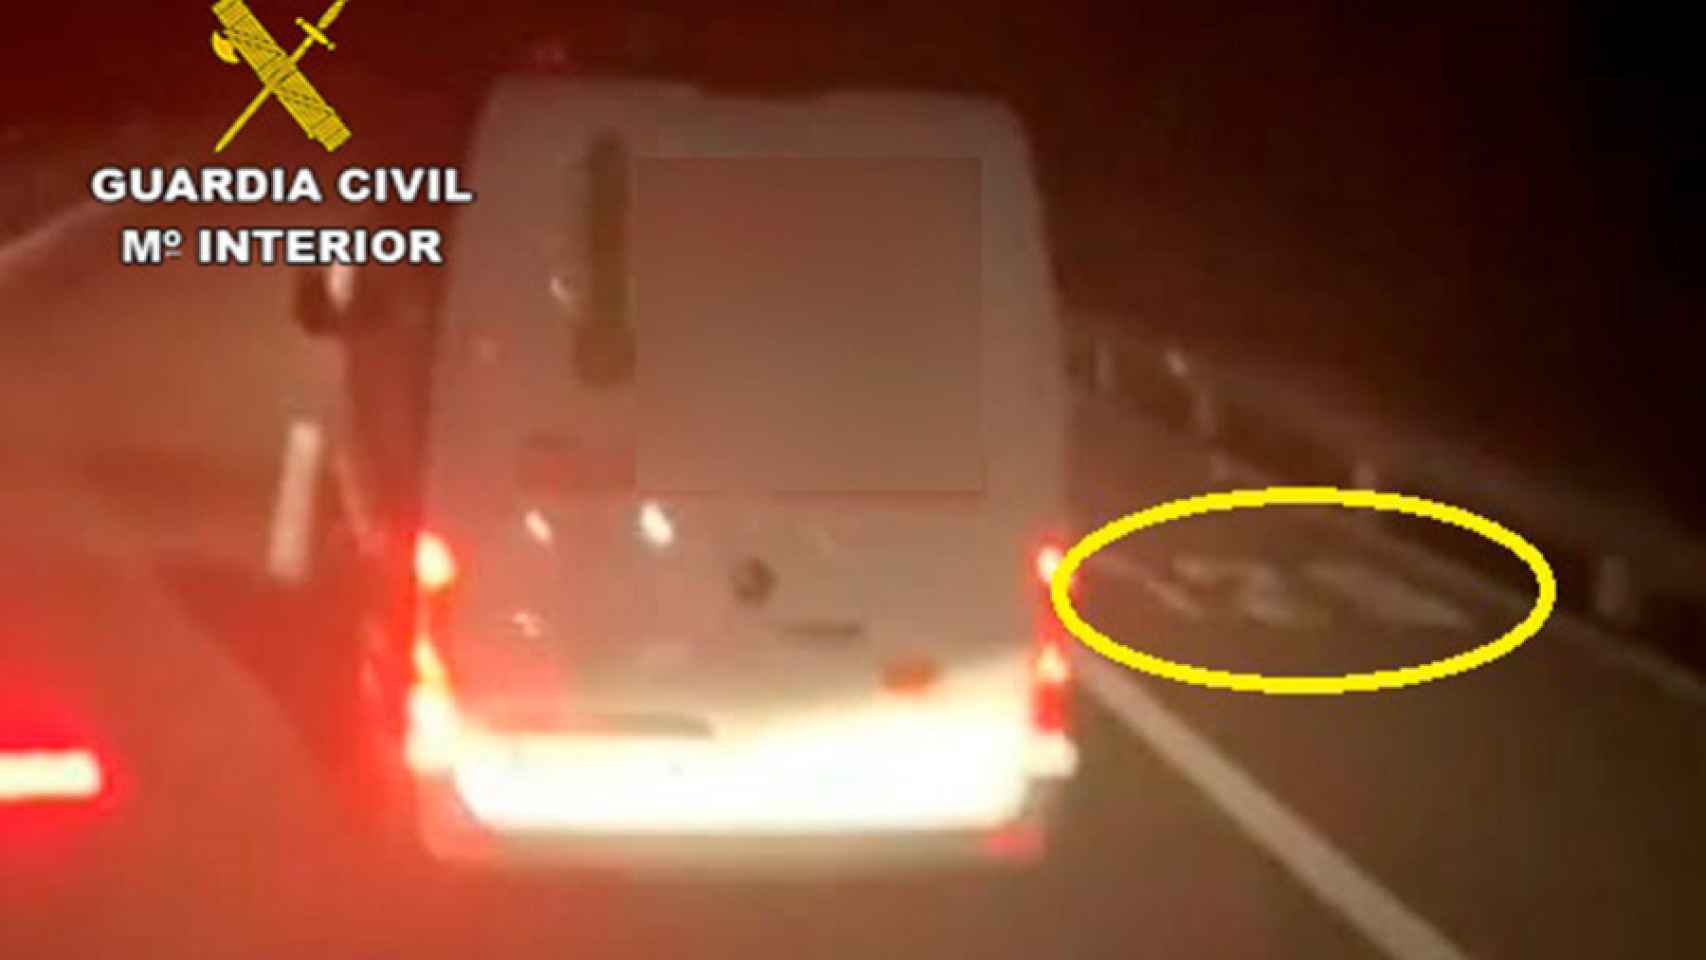 La Guardia Civil logró identificar al conductor de la furgoneta gracias al vídeo que grabó el camionero.